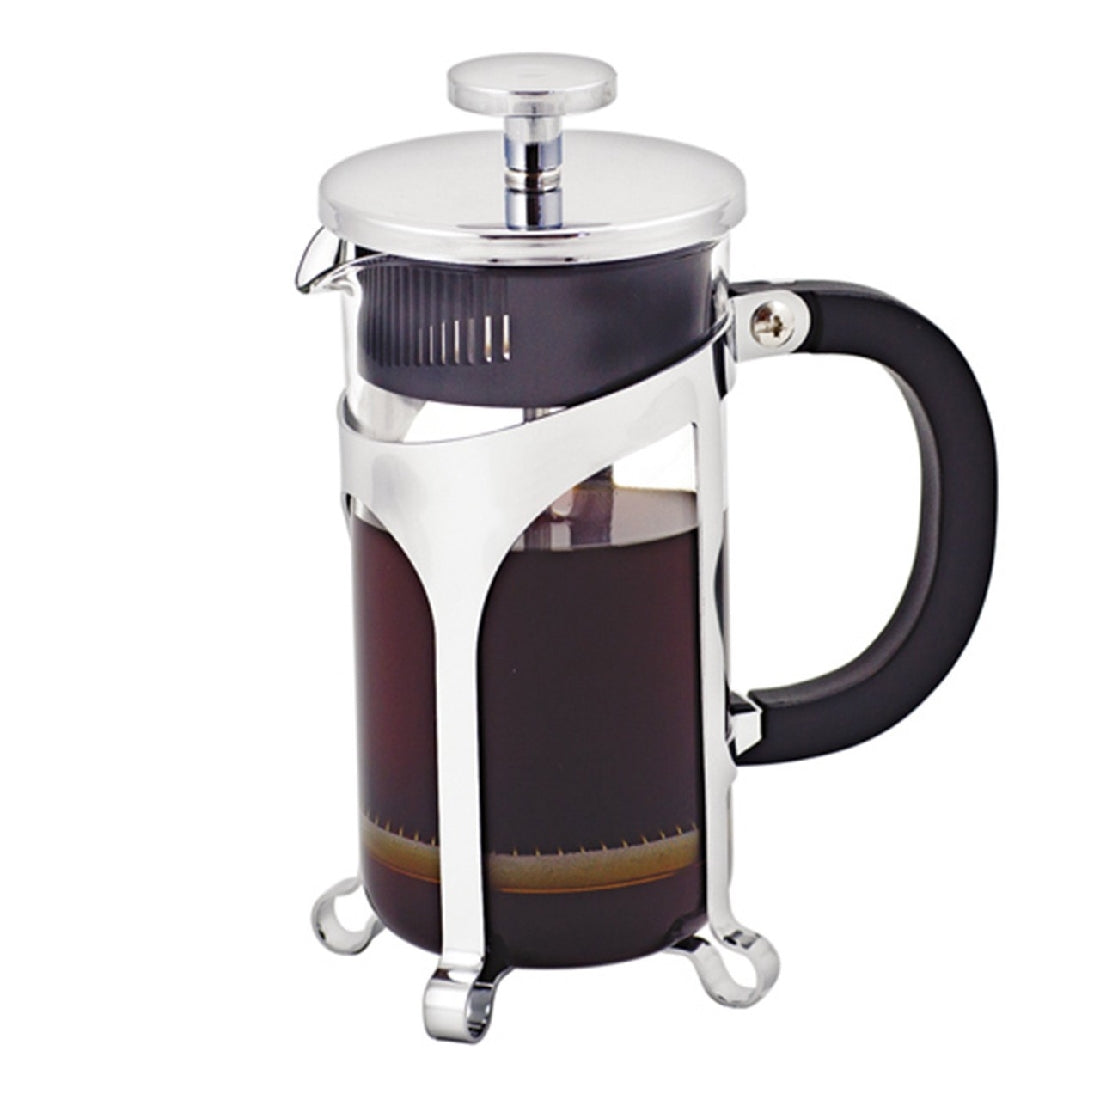 Avanti Cafe Press Coffee Plunger 375ml - 3 Cup